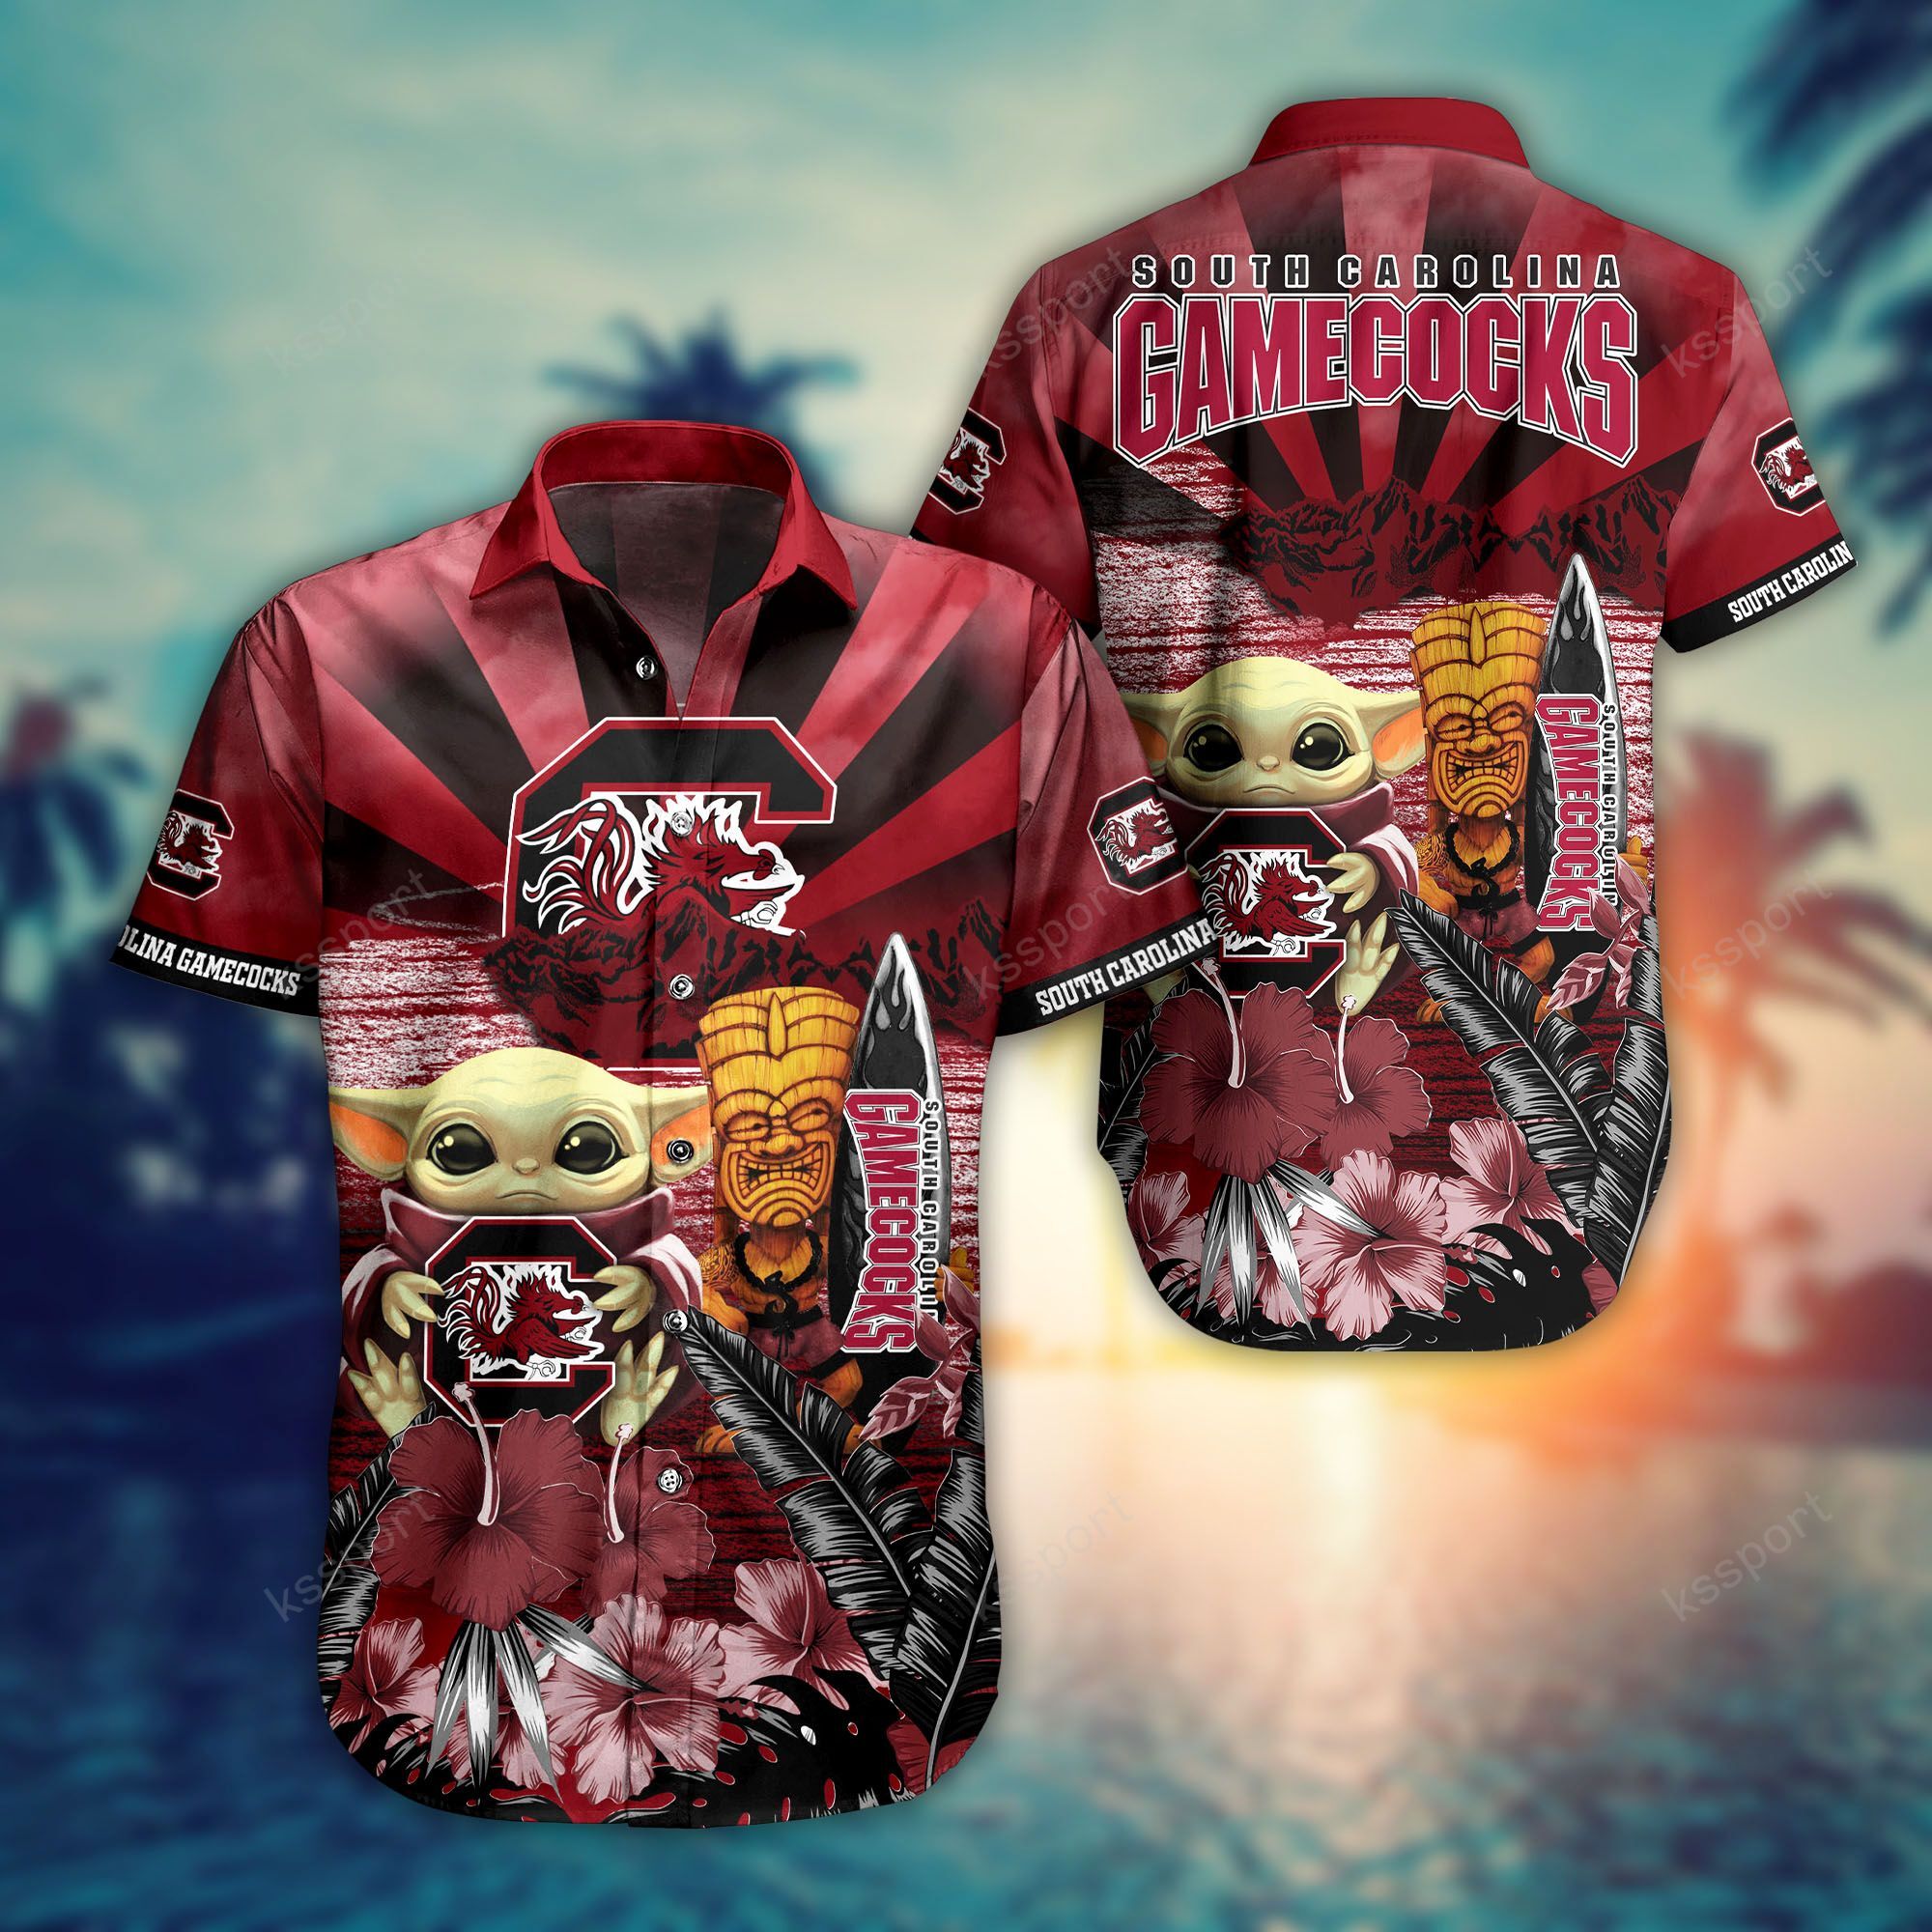 Order Hawaiian shirts to wear on your vacation 9